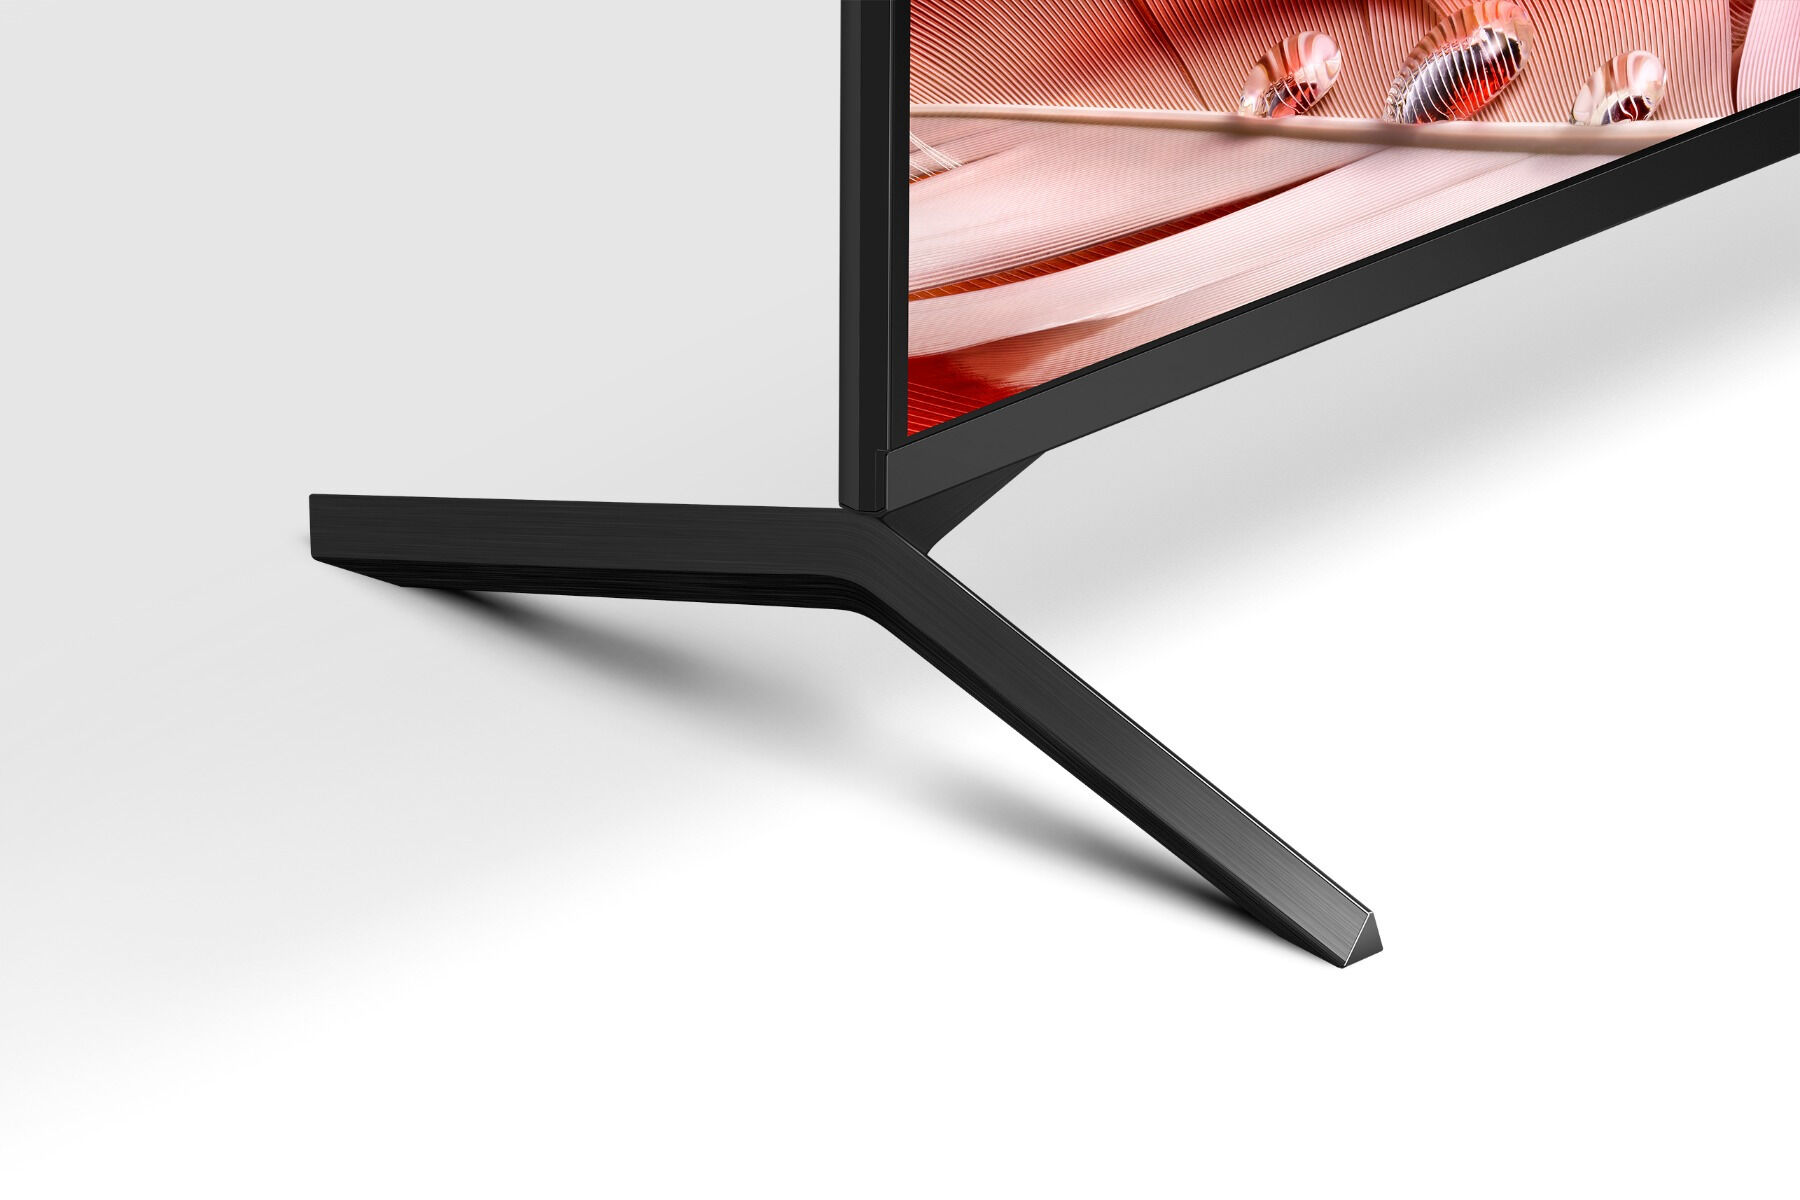 Televizor LED Smart Sony 55X93, 138.8 cm, Smart Google TV, 4K Ultra HD